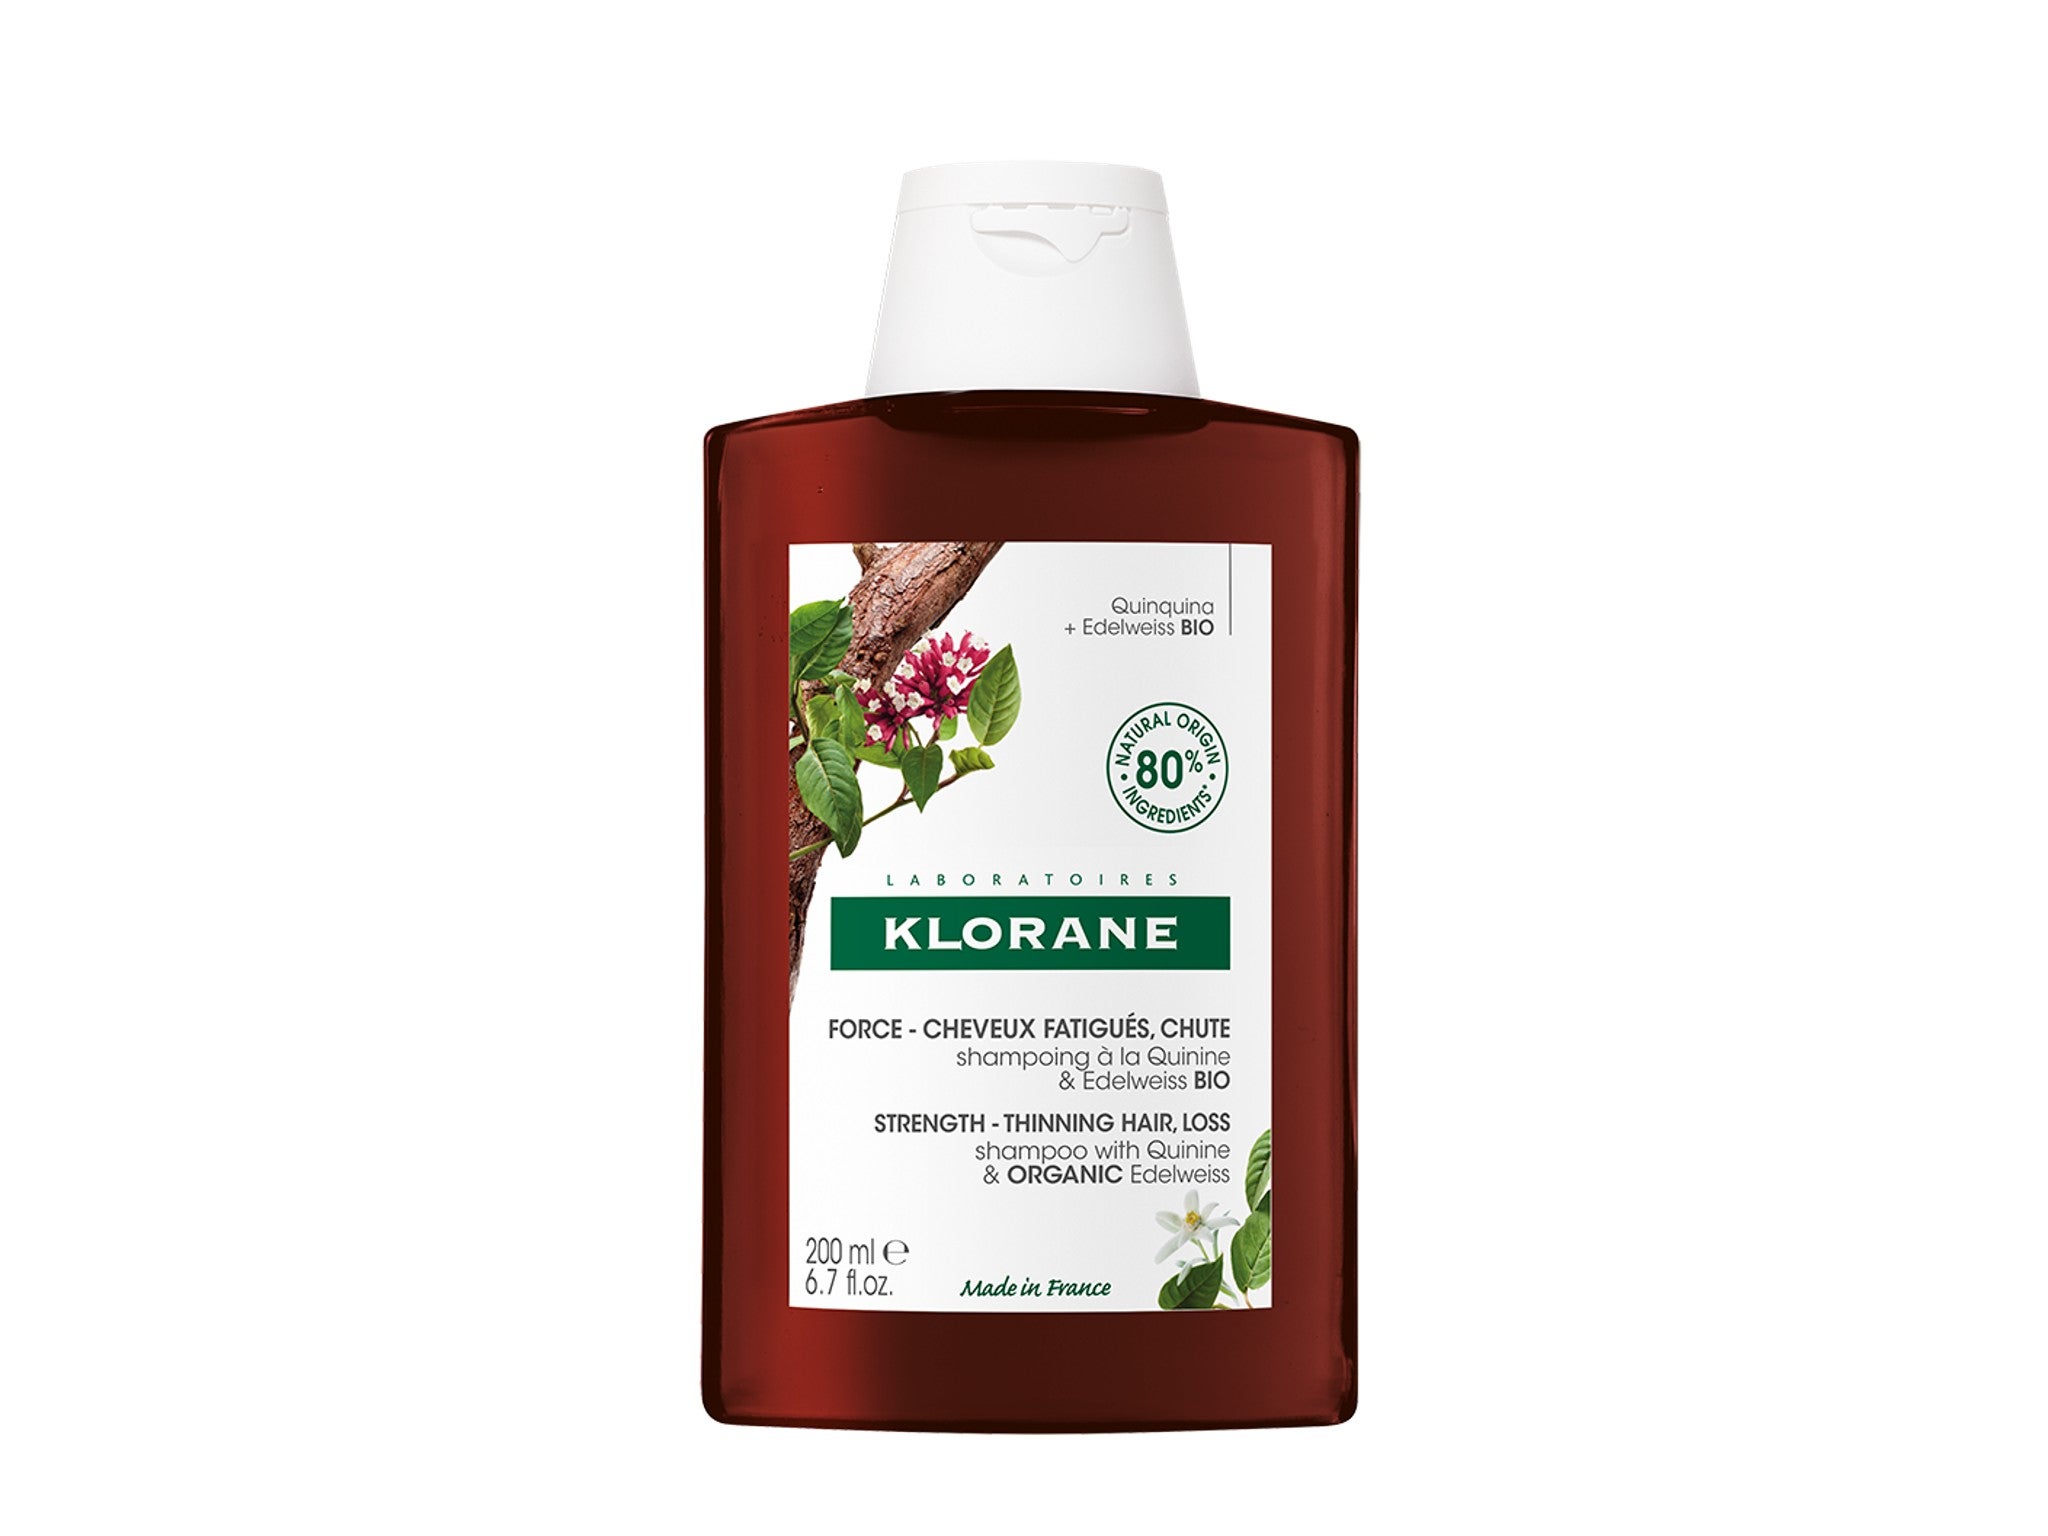 Klorane strengthening shampoo, 200ml indybest.jpg